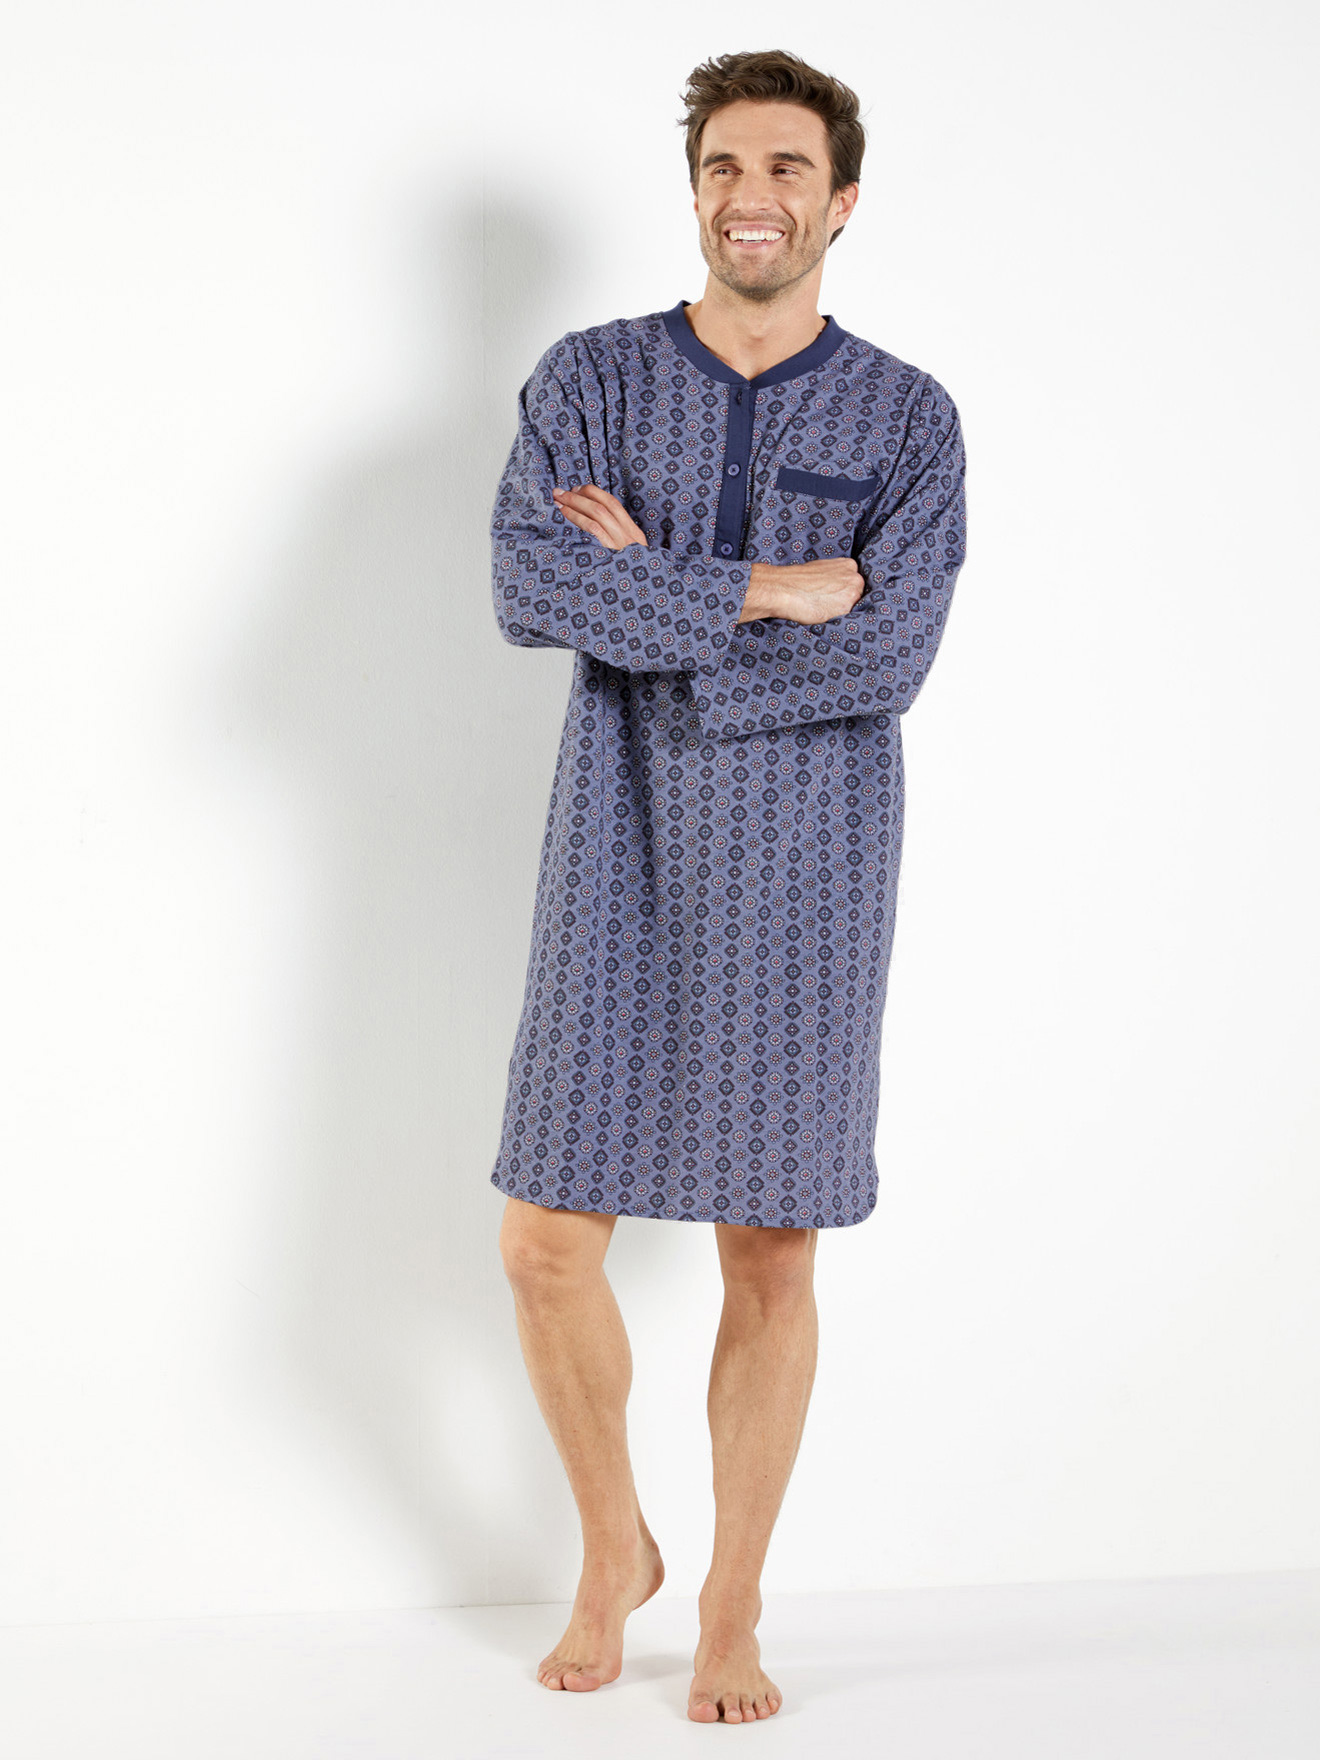 pyjama liquette homme